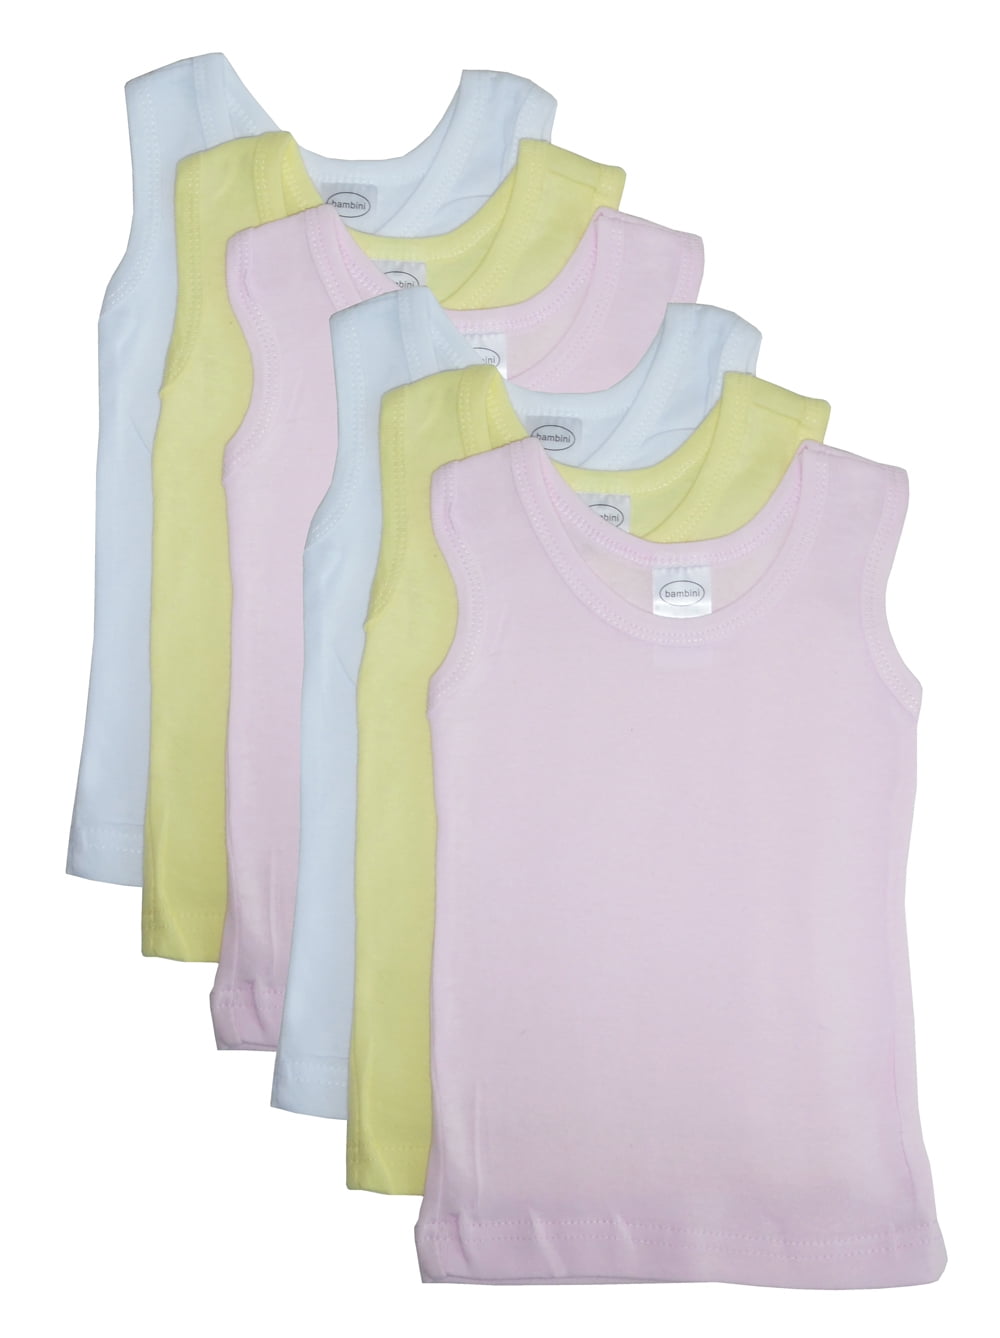 Girls Short Sleeve Tees 0-24 Months Boys Baby Sleeveless Tank Tops 100% Cotton Shirts Unisex 